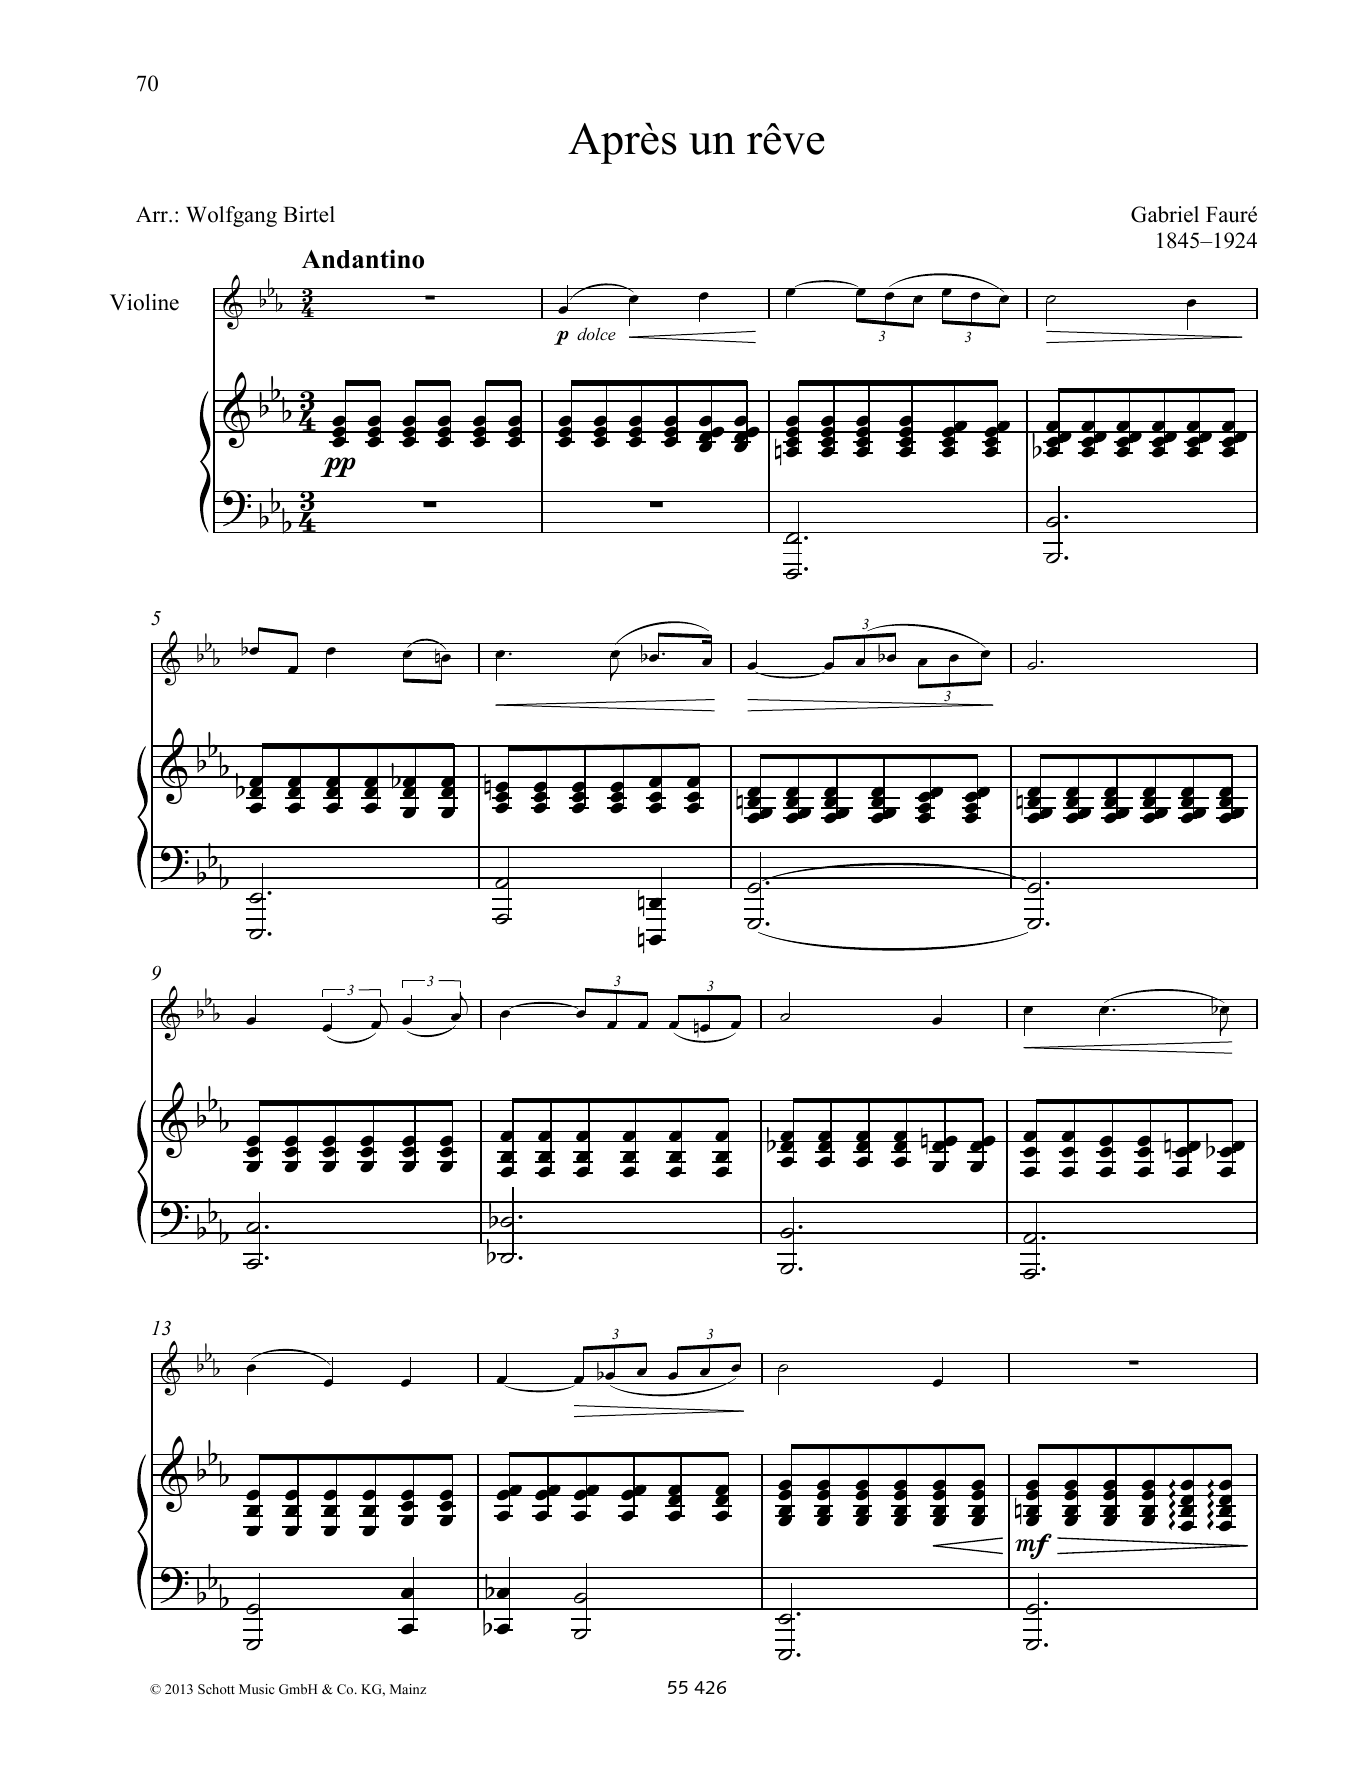 Gabriel Faure Apres un reve Sheet Music Notes & Chords for String Solo - Download or Print PDF